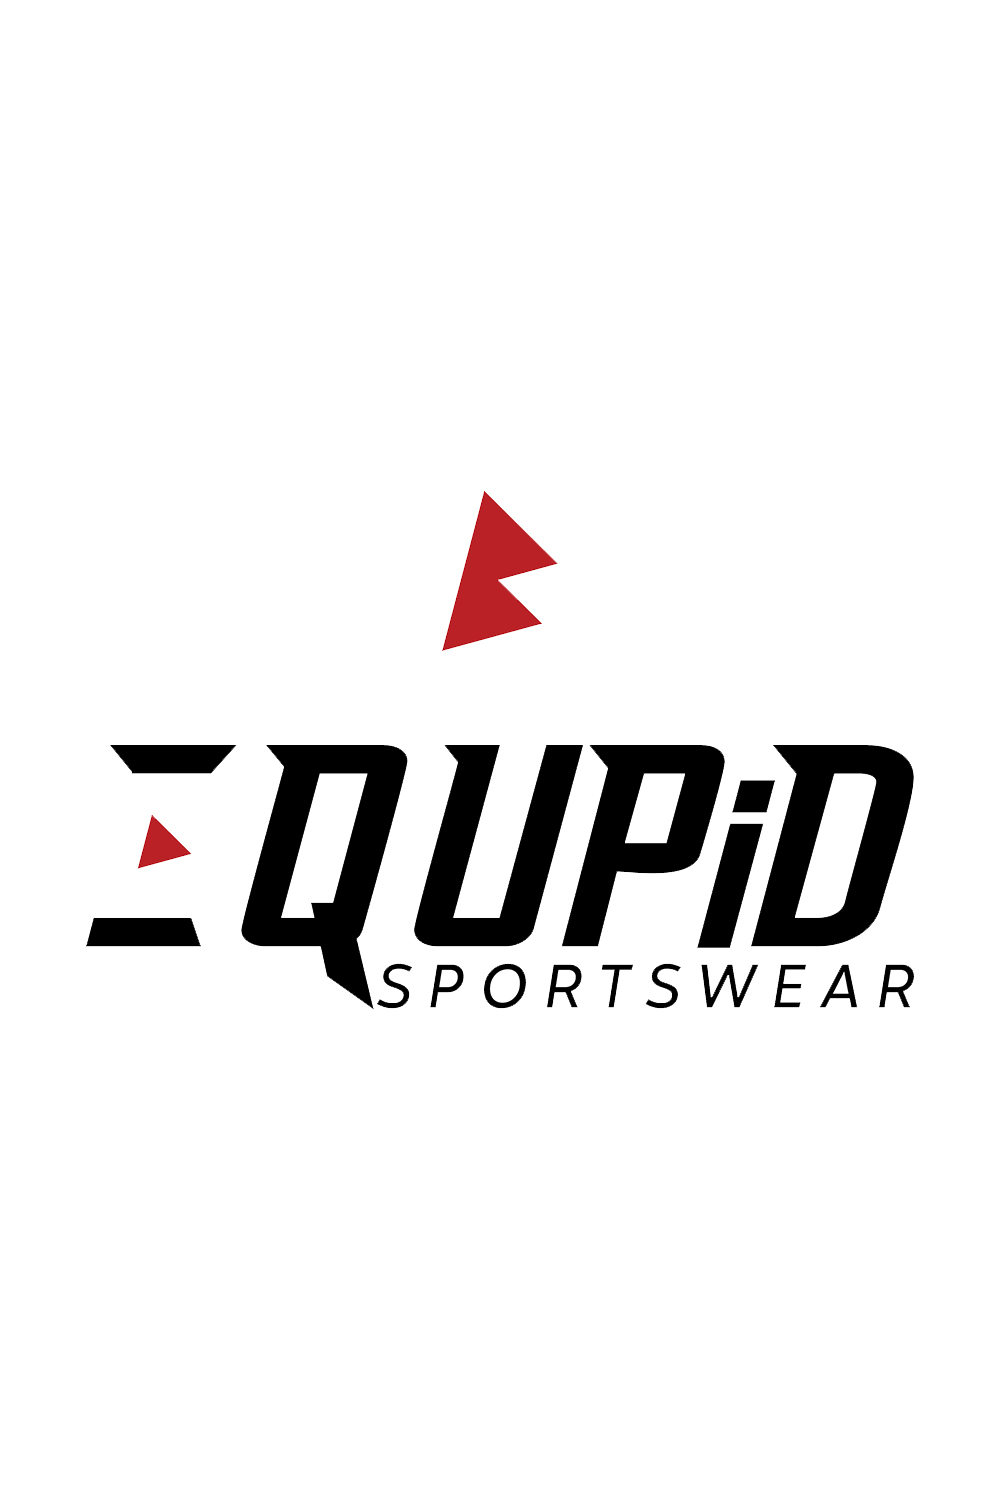 Sports Wear Logo Design pinterest preview image.